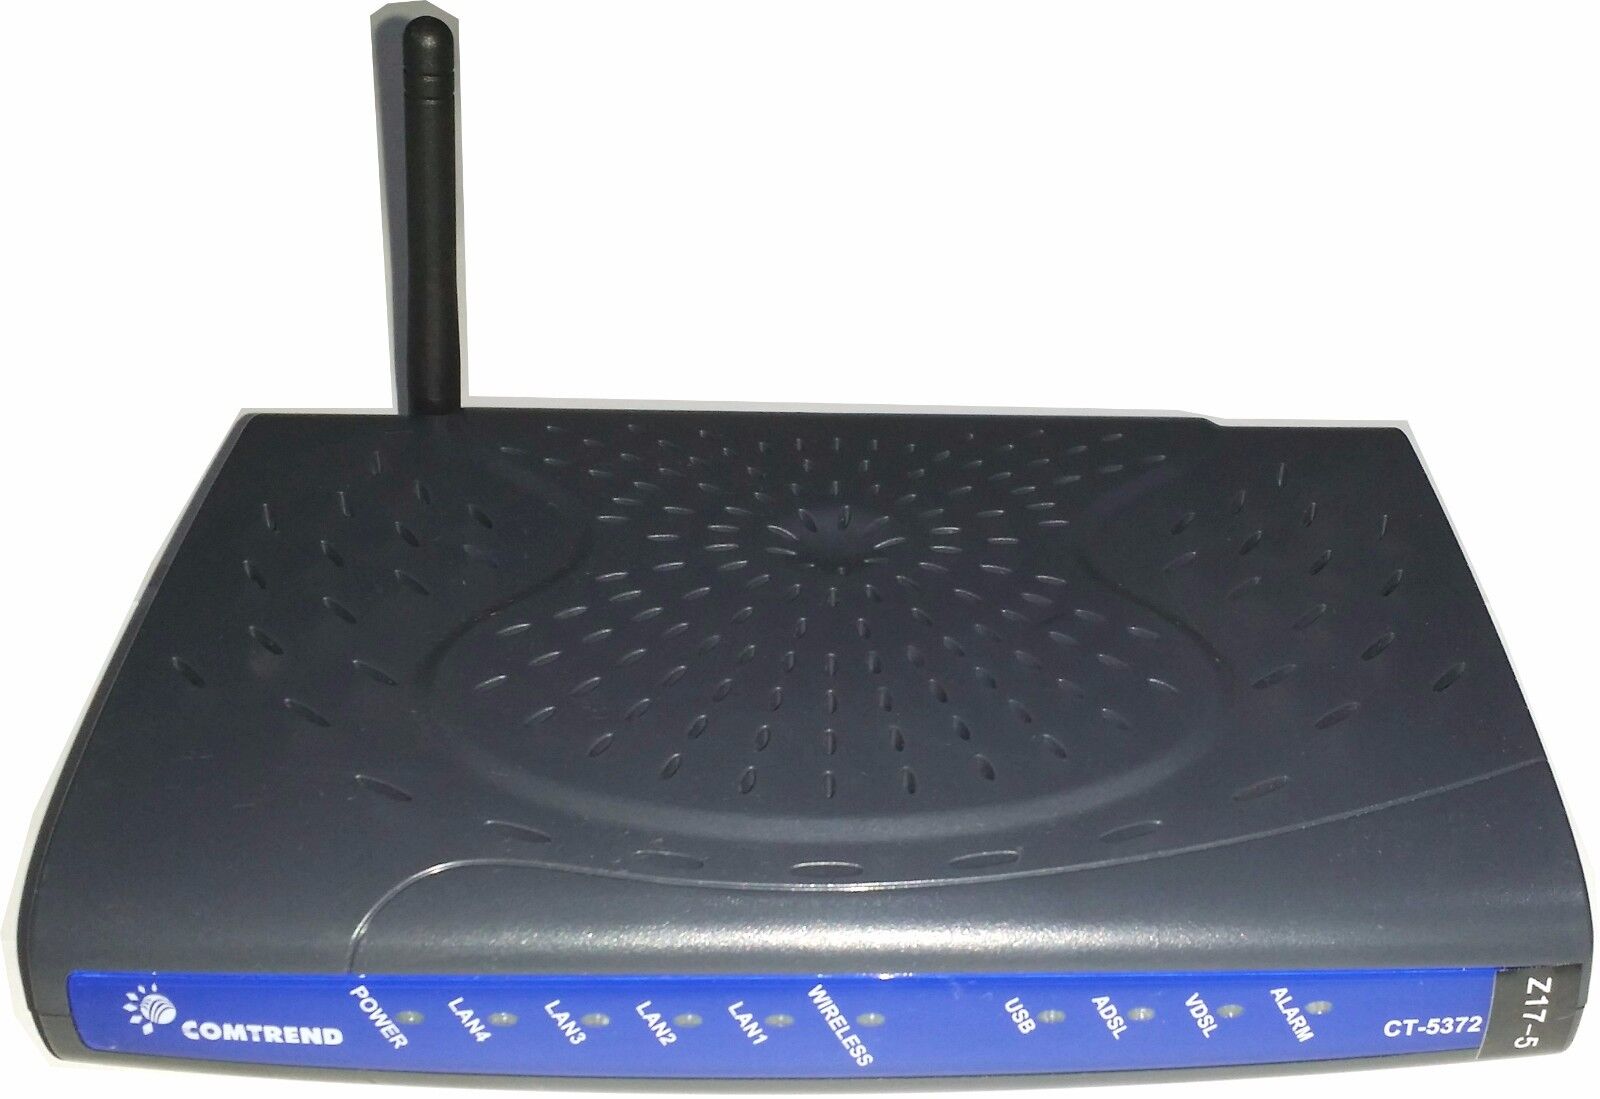 Comtrend Multi-DSL Wlan Wireless Router / Gateway CT-5372 [No Power Supply]